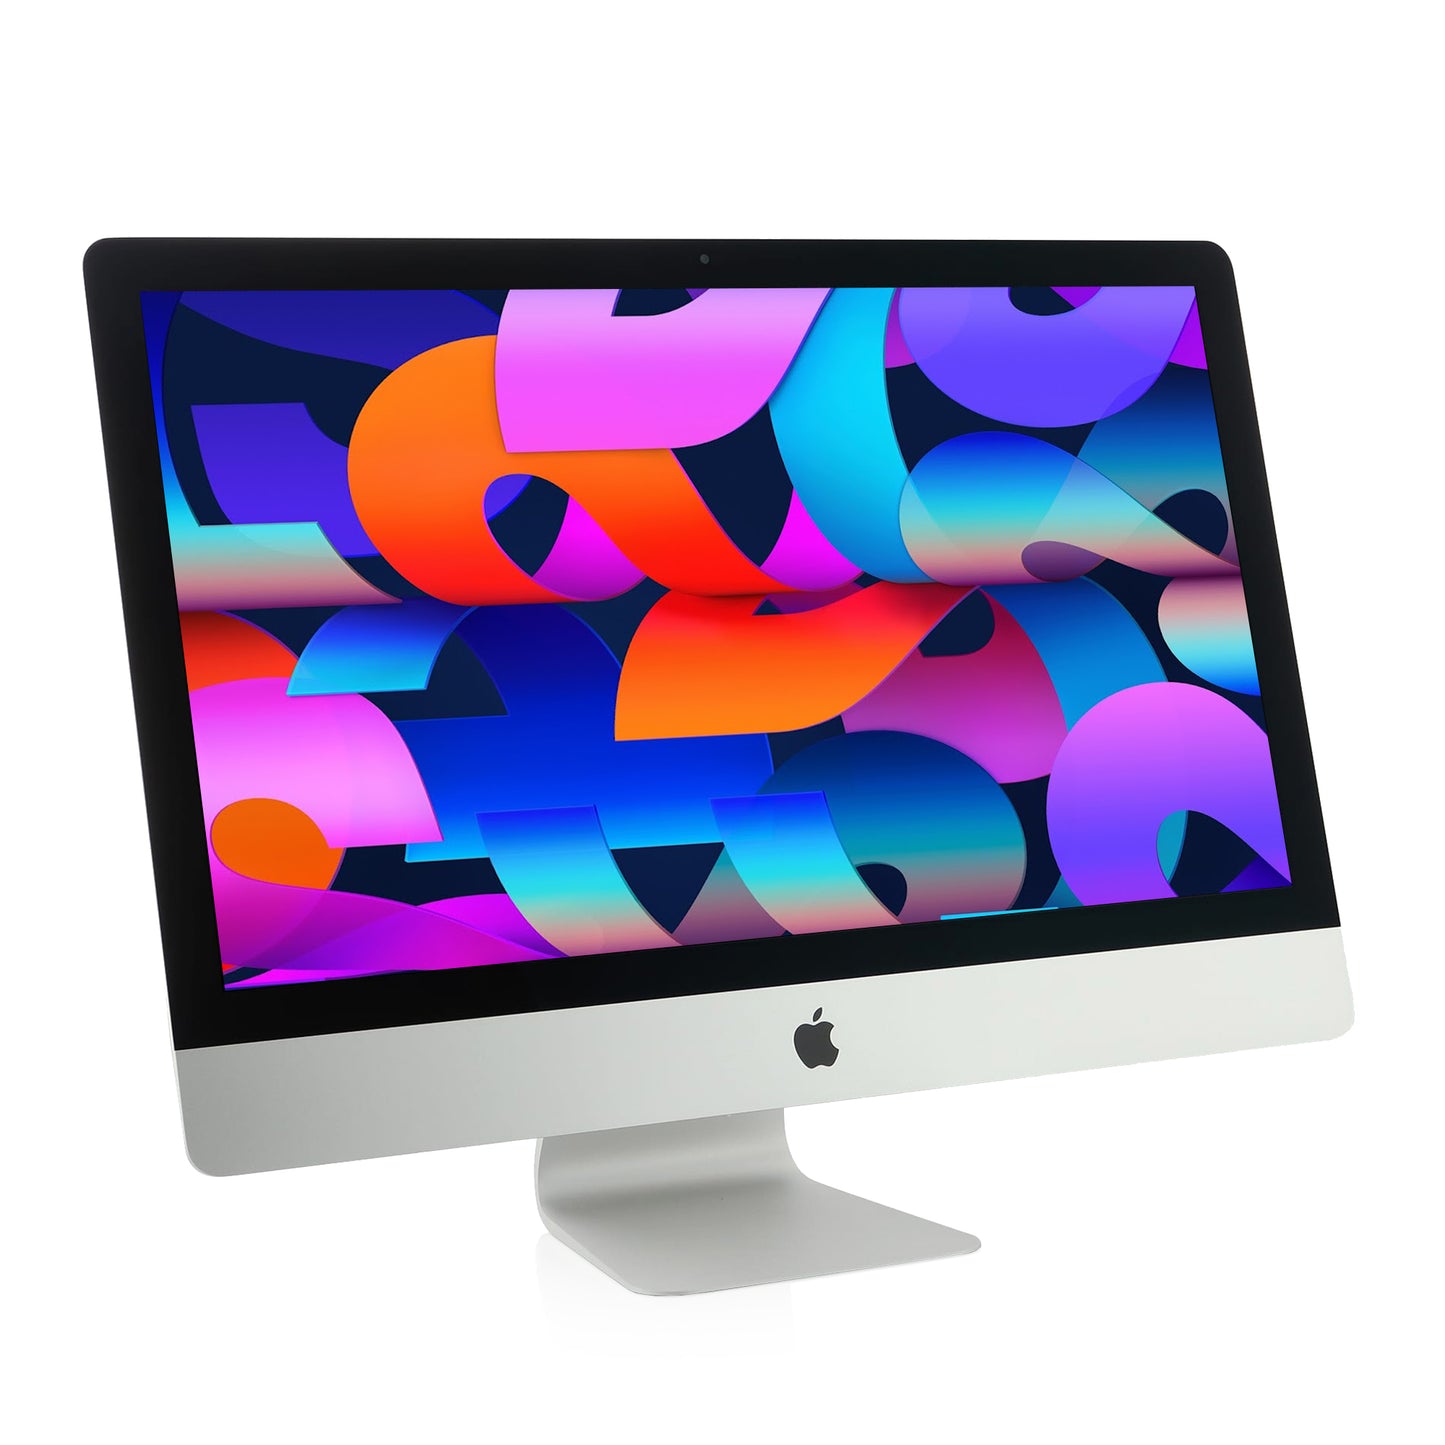 2019 Apple iMac 5K 27-inch Intel i5 3 GHz 6-core 16GB 256GB 570X 4GB